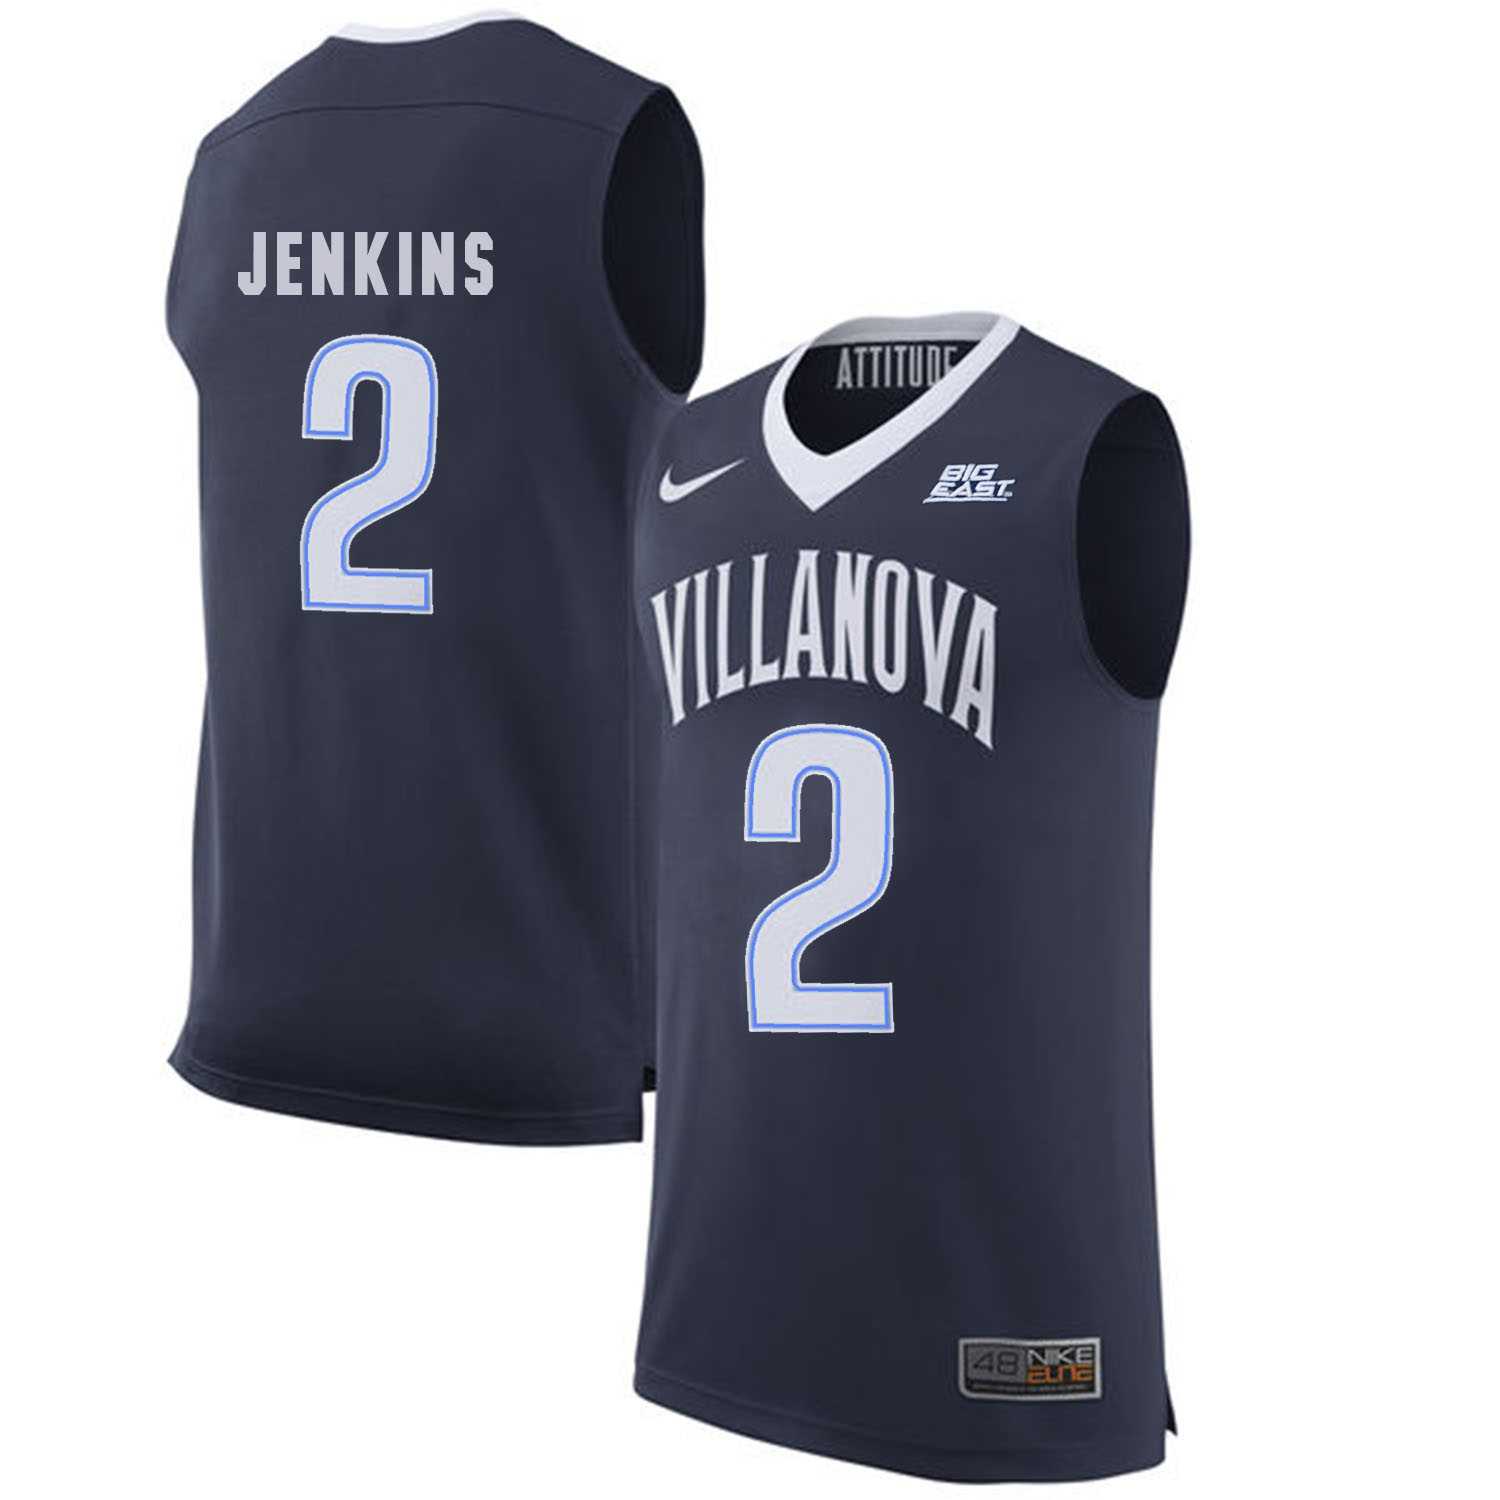 Villanova Wildcats #2 Kris Jenkins Navy College Basketball Elite Jersey